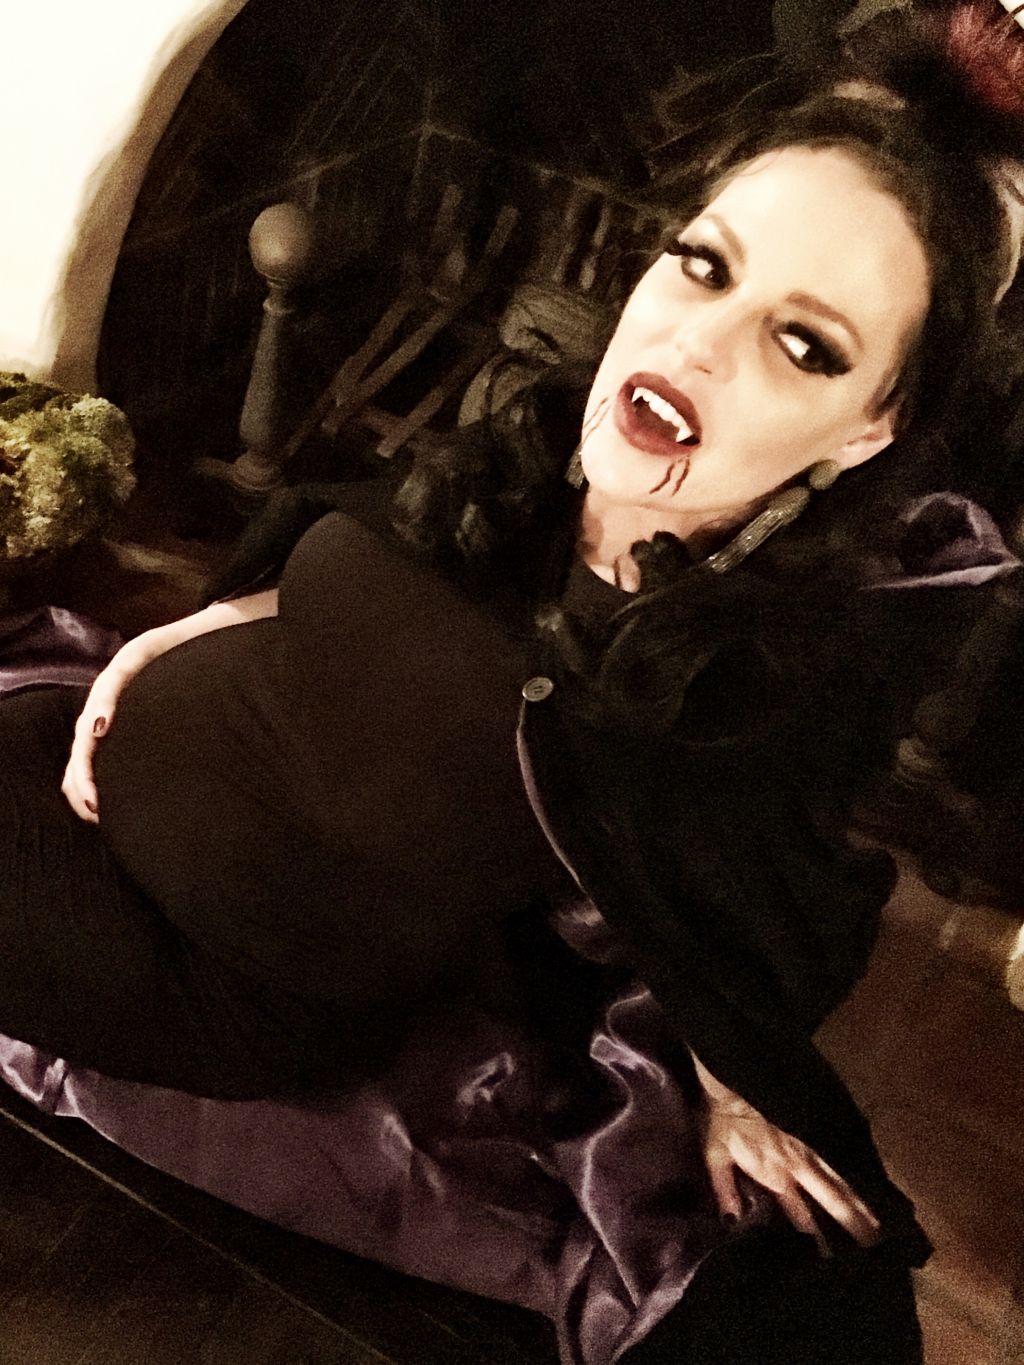 Katherine Heigl - Halloween vampire costume